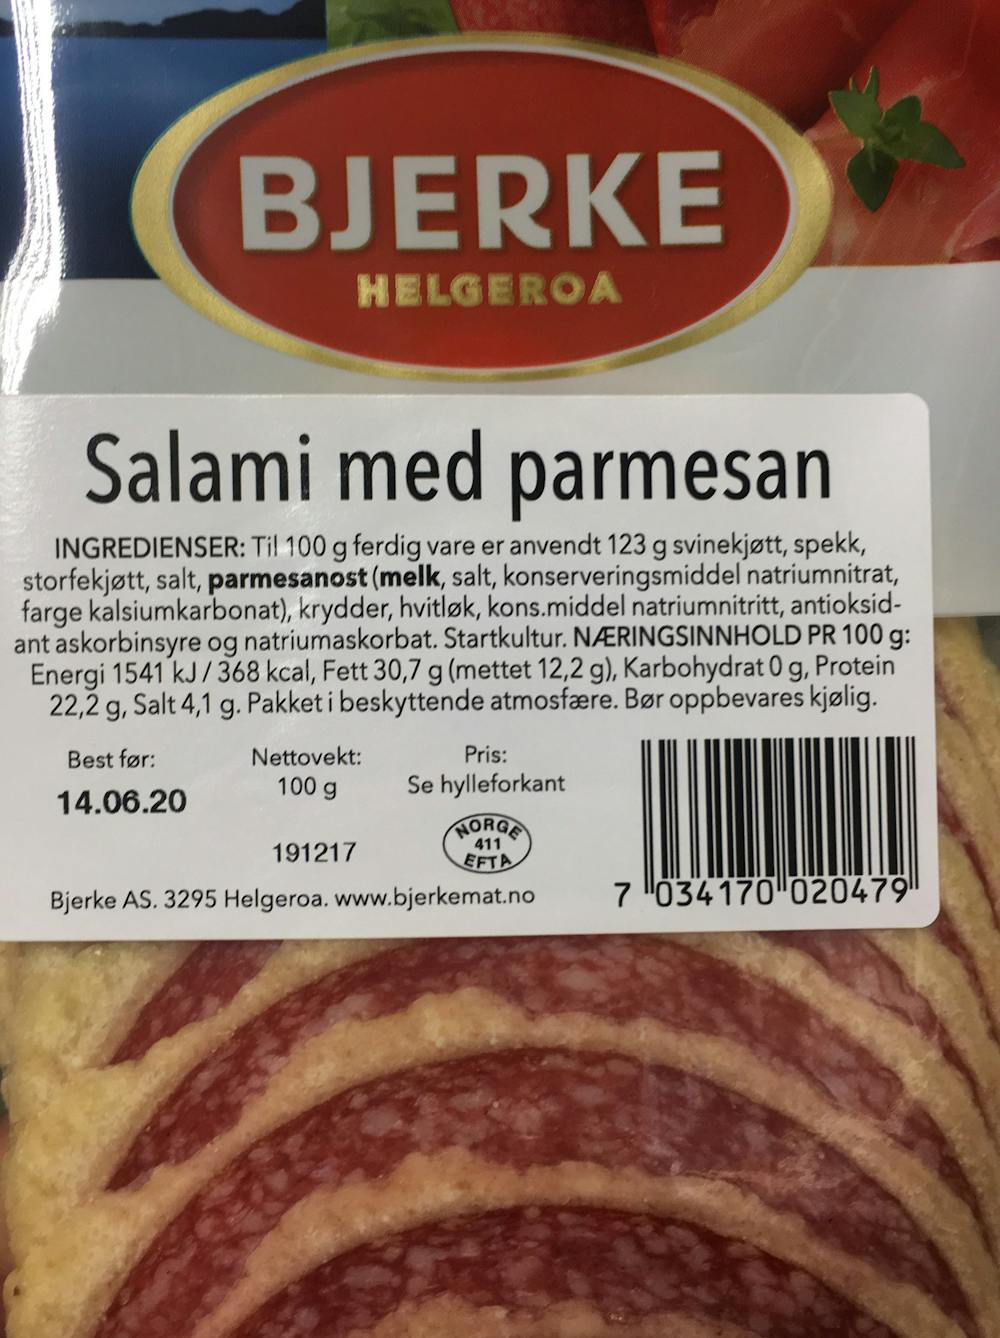 Salami med parmesan, Bjerke